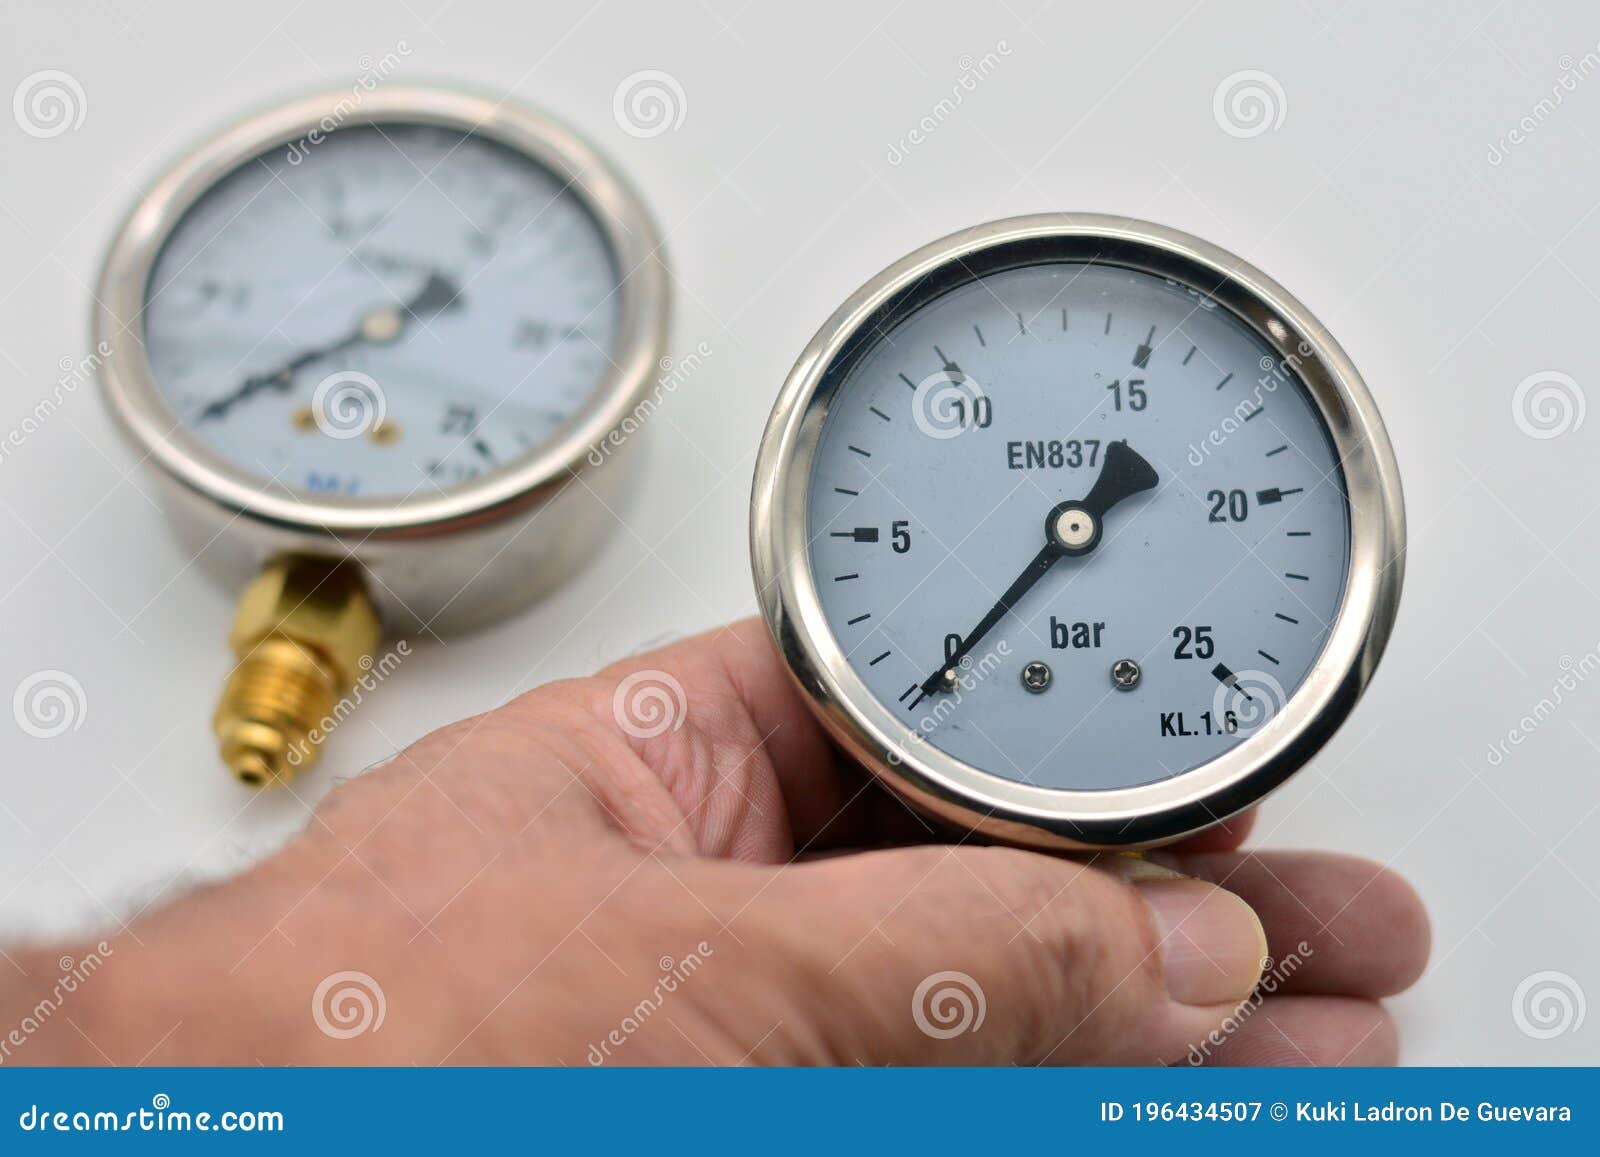 hand holding a pressure gauge